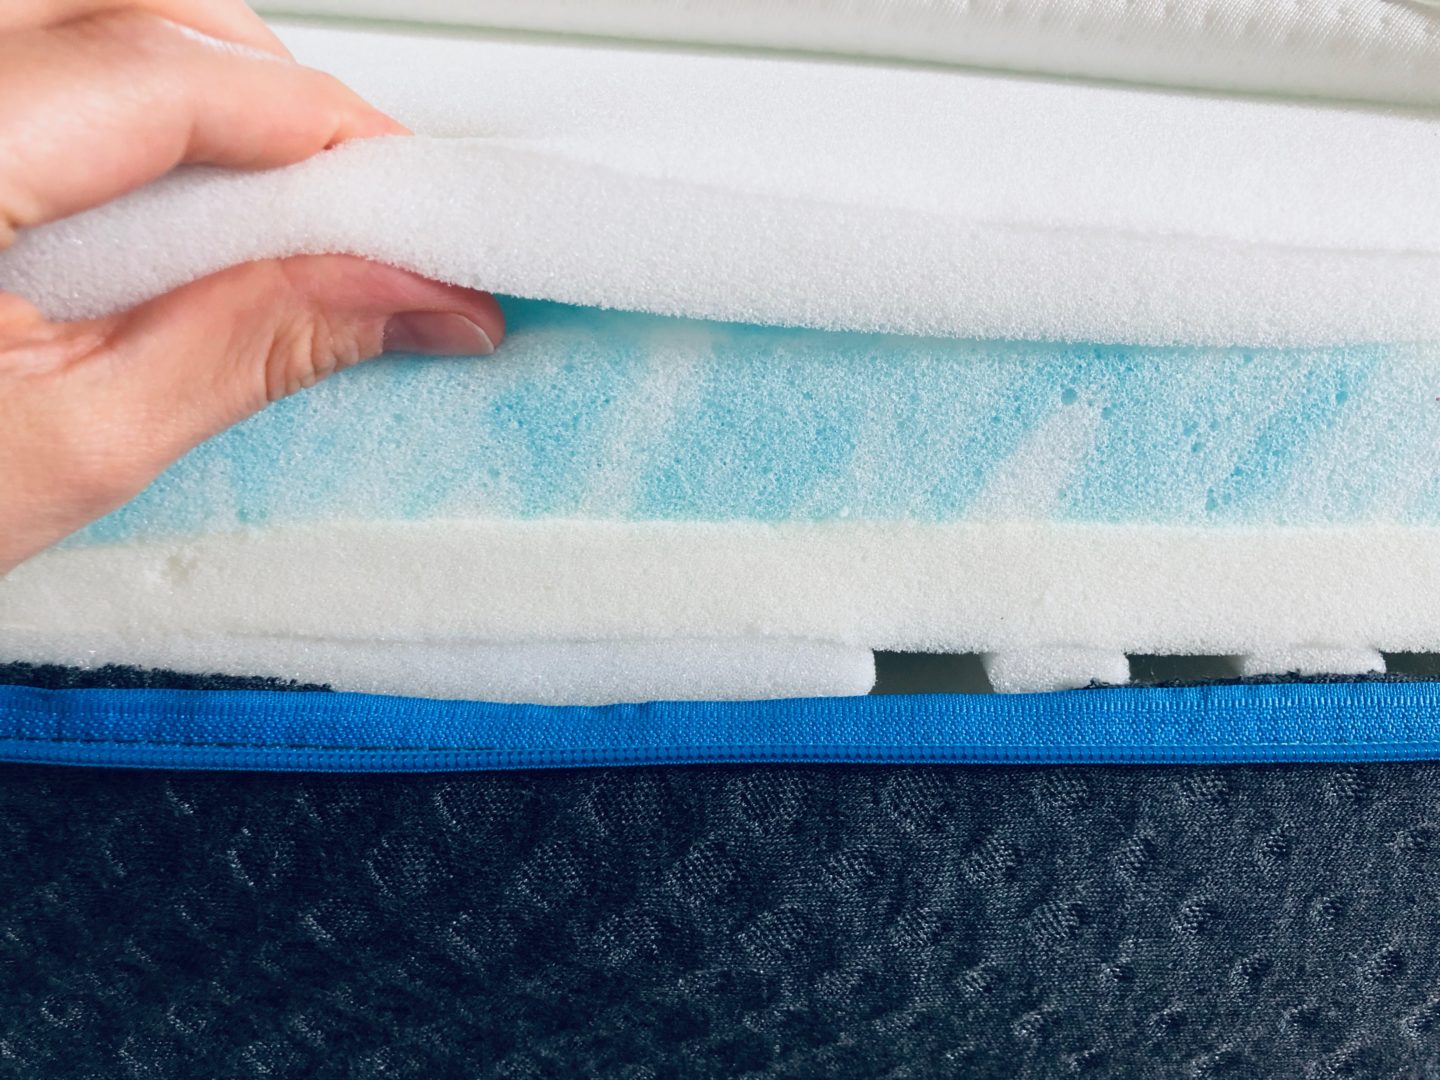 The Emma Mattress topper layer of foam applied to the mattress